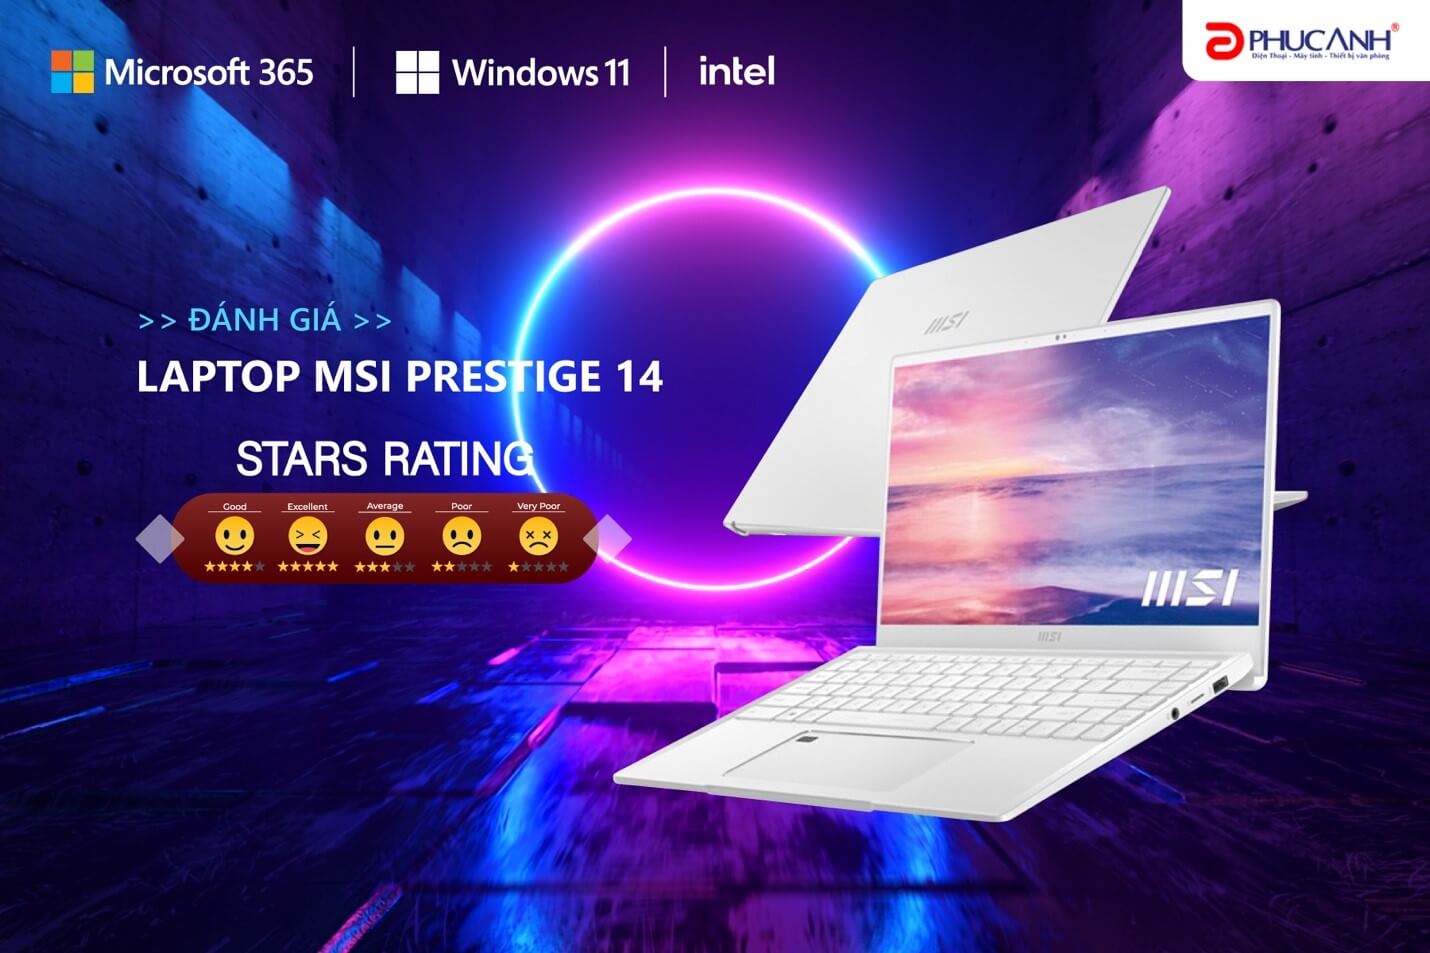 Review Laptop Msi Prestige 14, Laptop thanh lịch dành cho doanh nhân